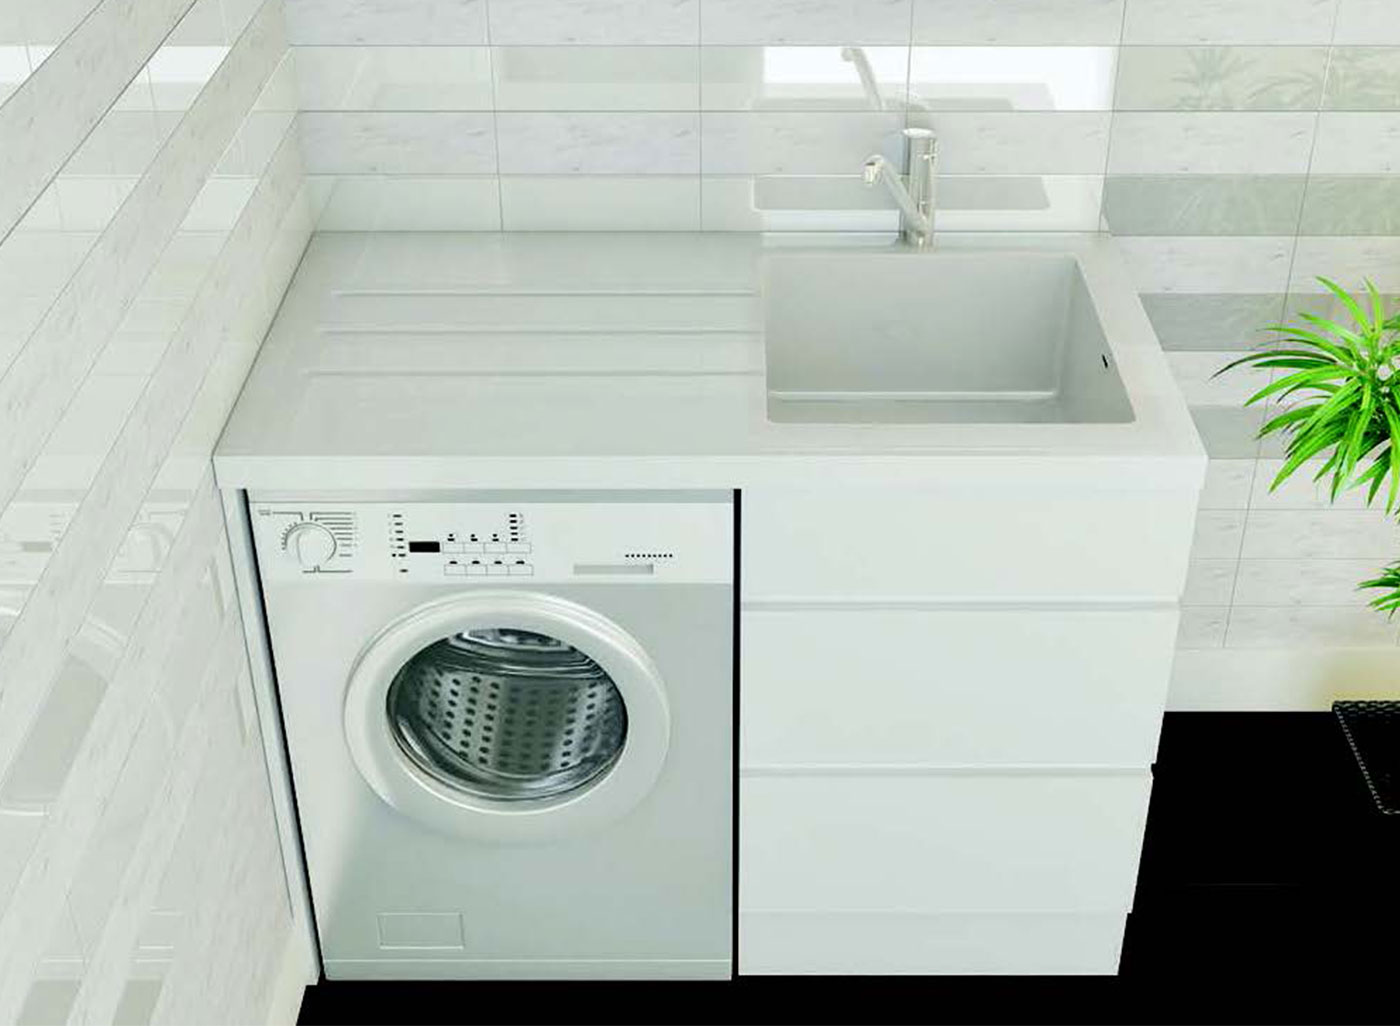 washing machine causing kitchen sink to overflow apartment building